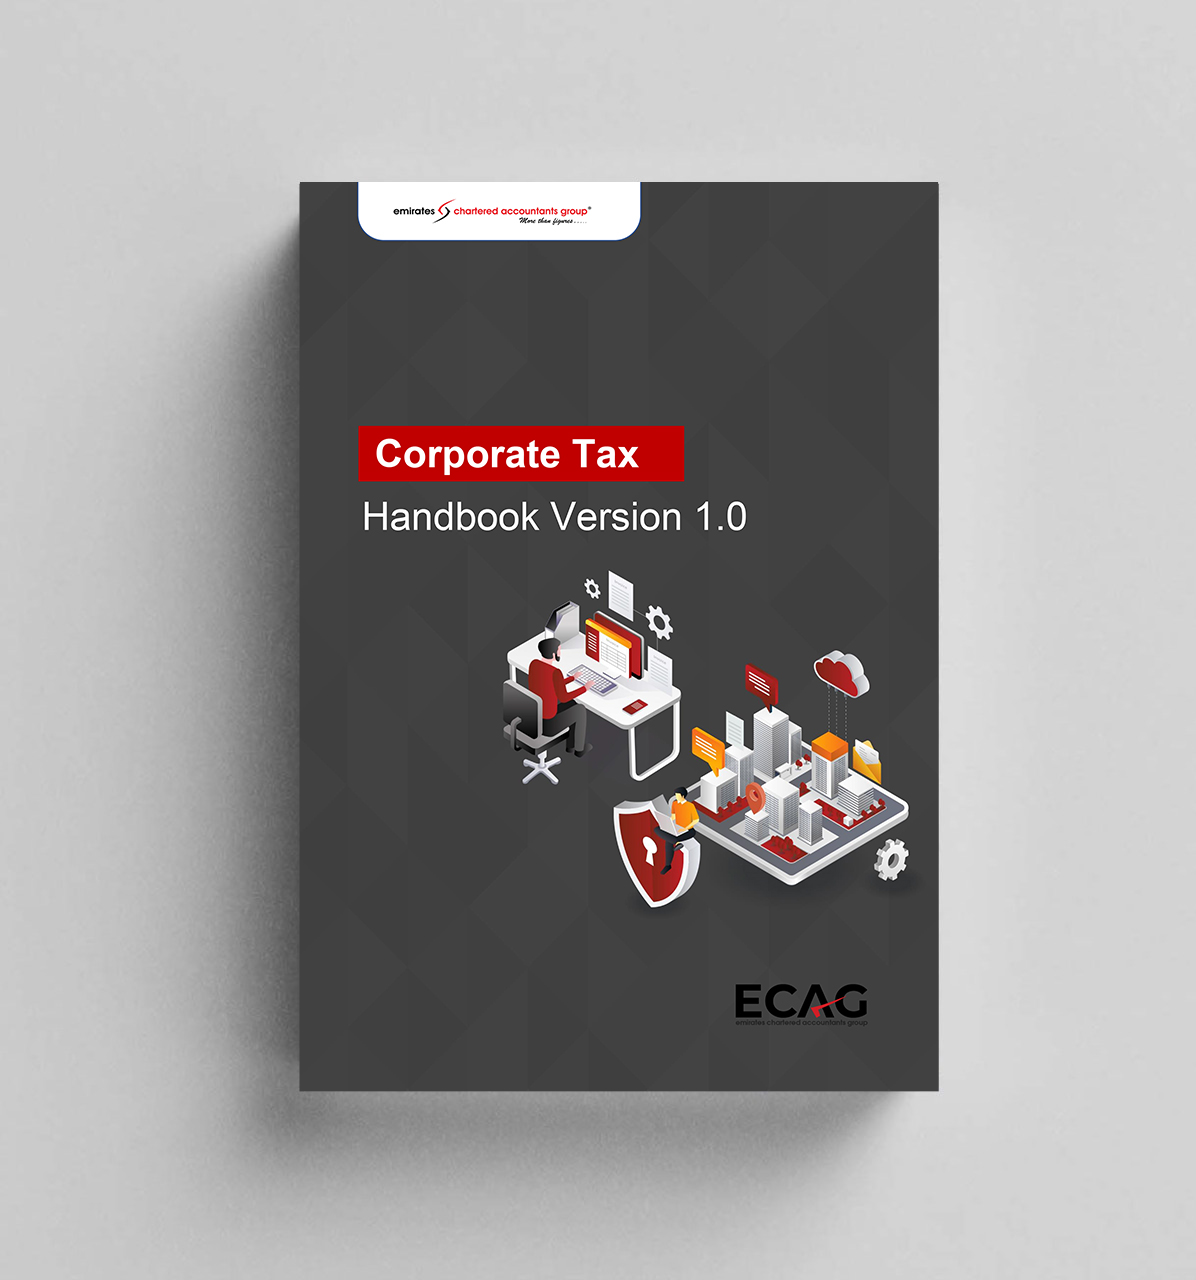 Corporate Tax Handbook Version 1